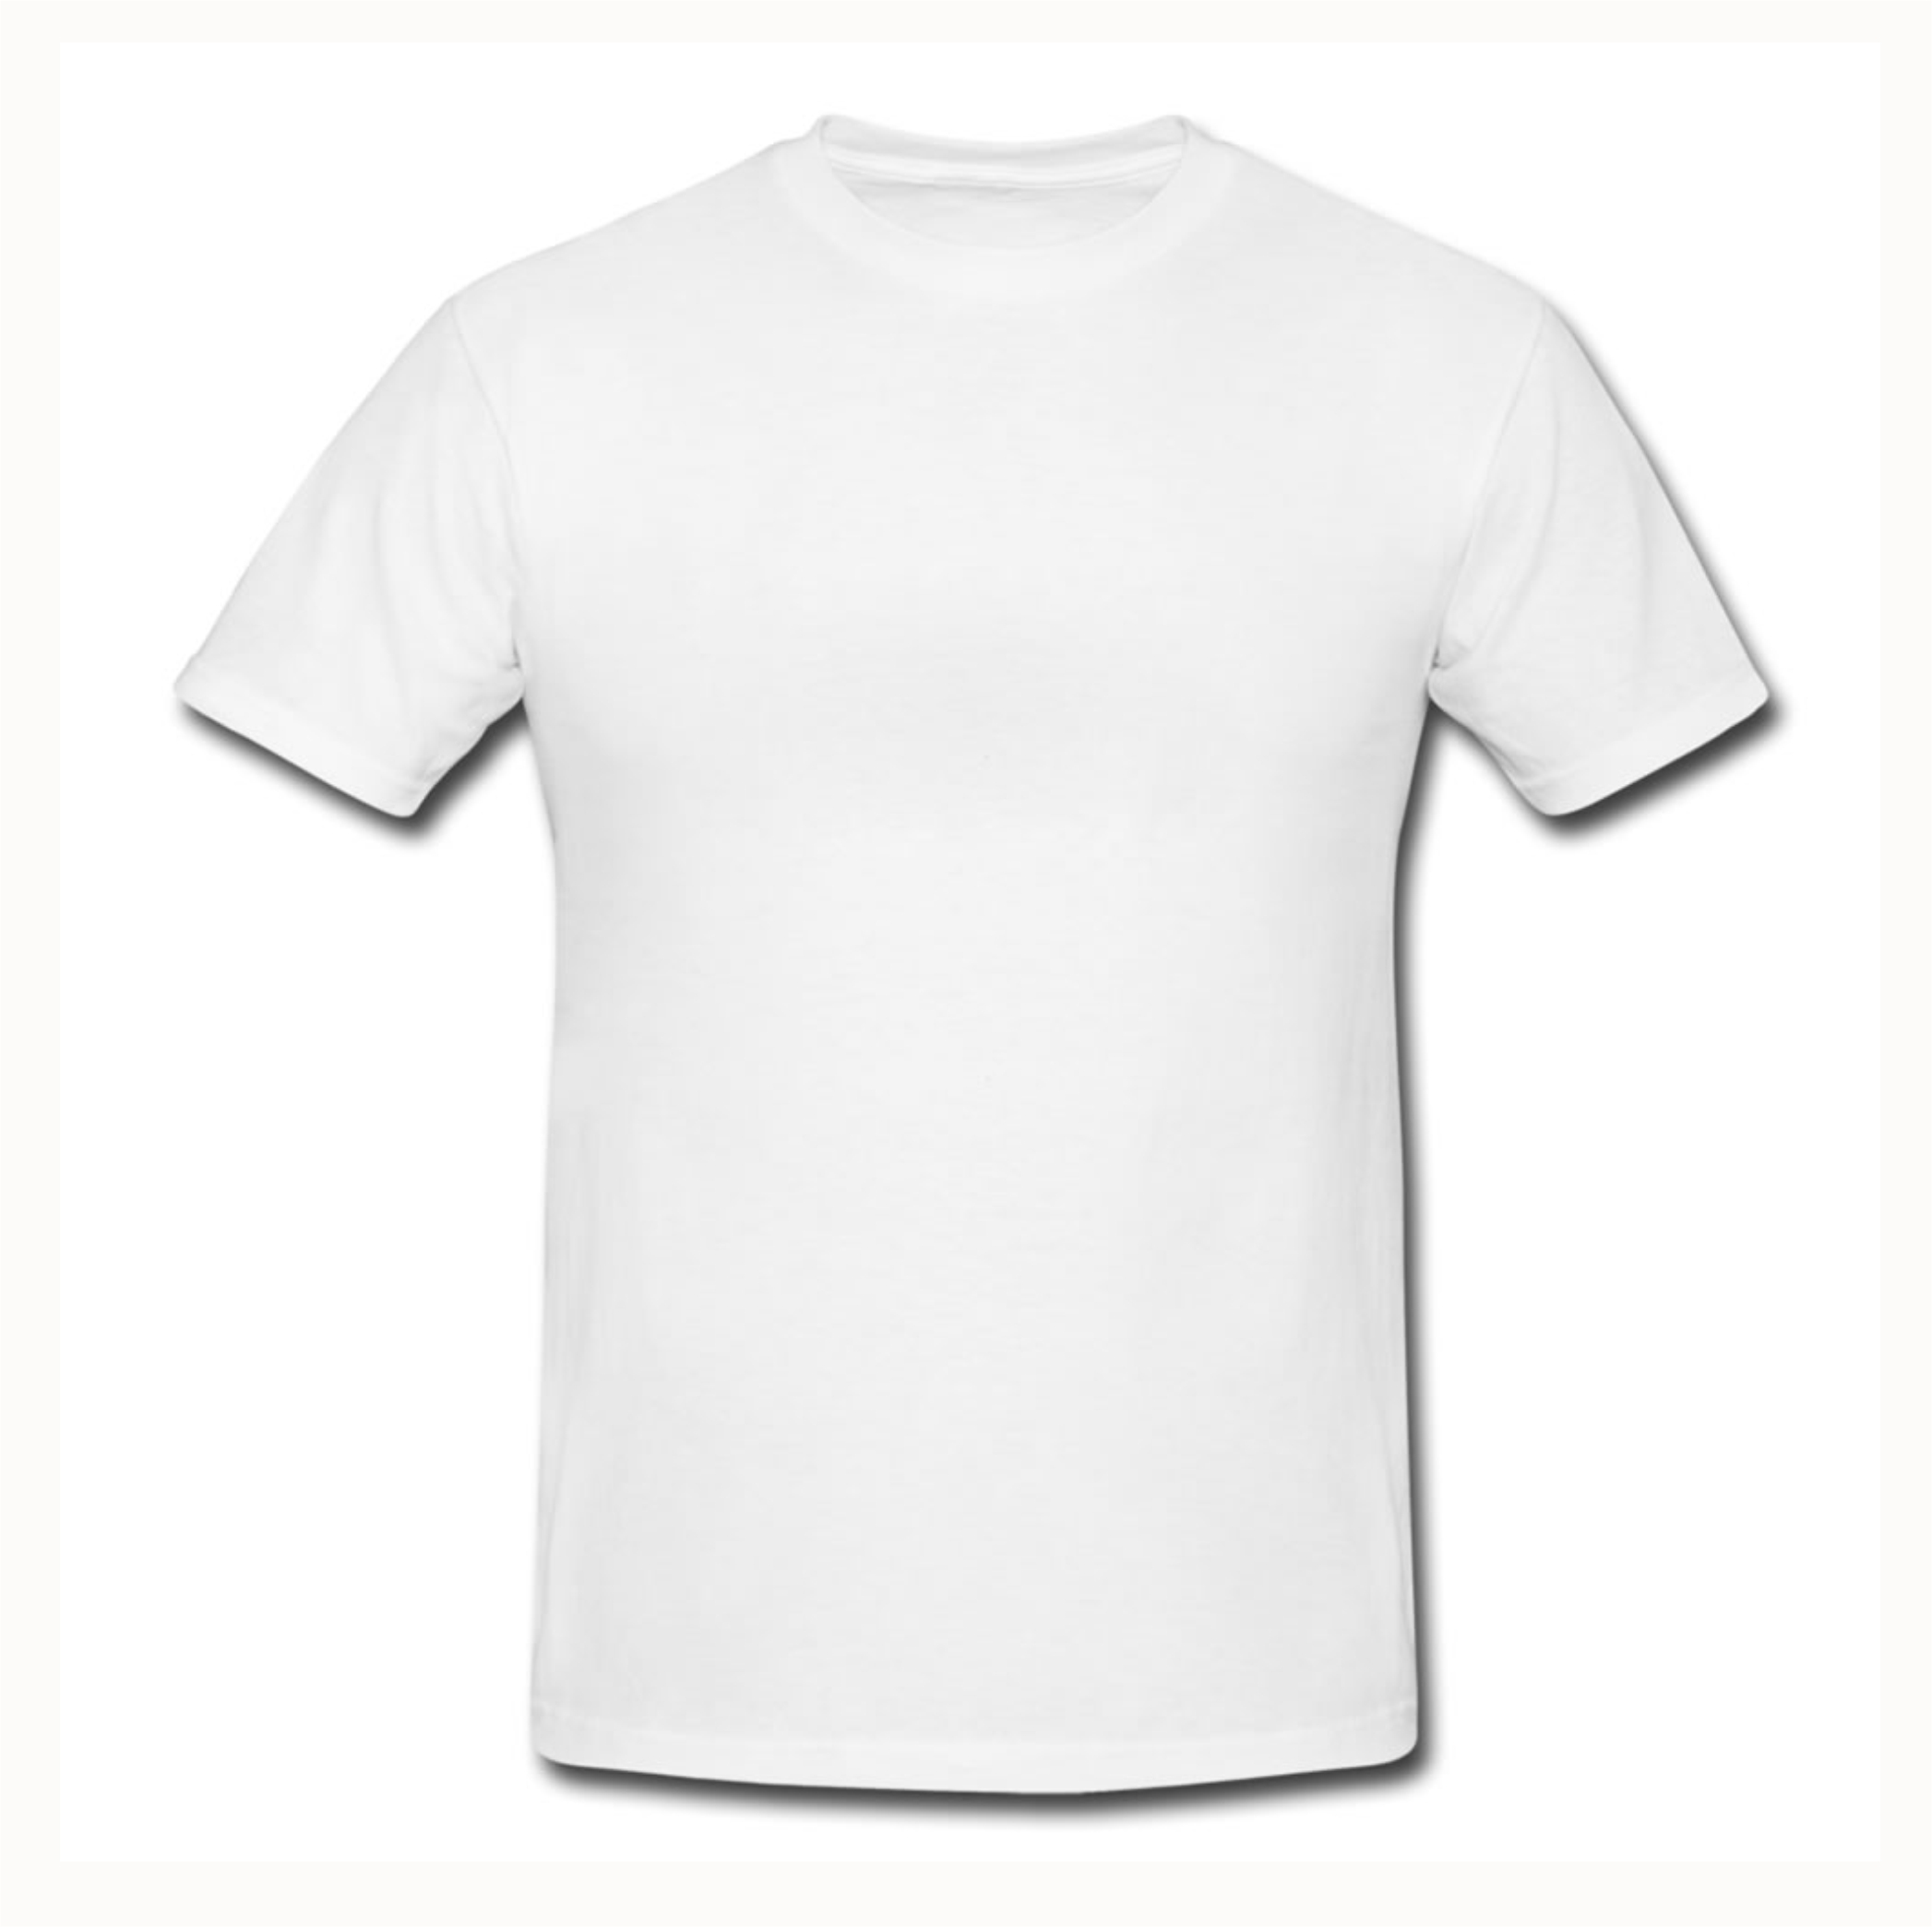 Plain White T Shirt Crested School Wear